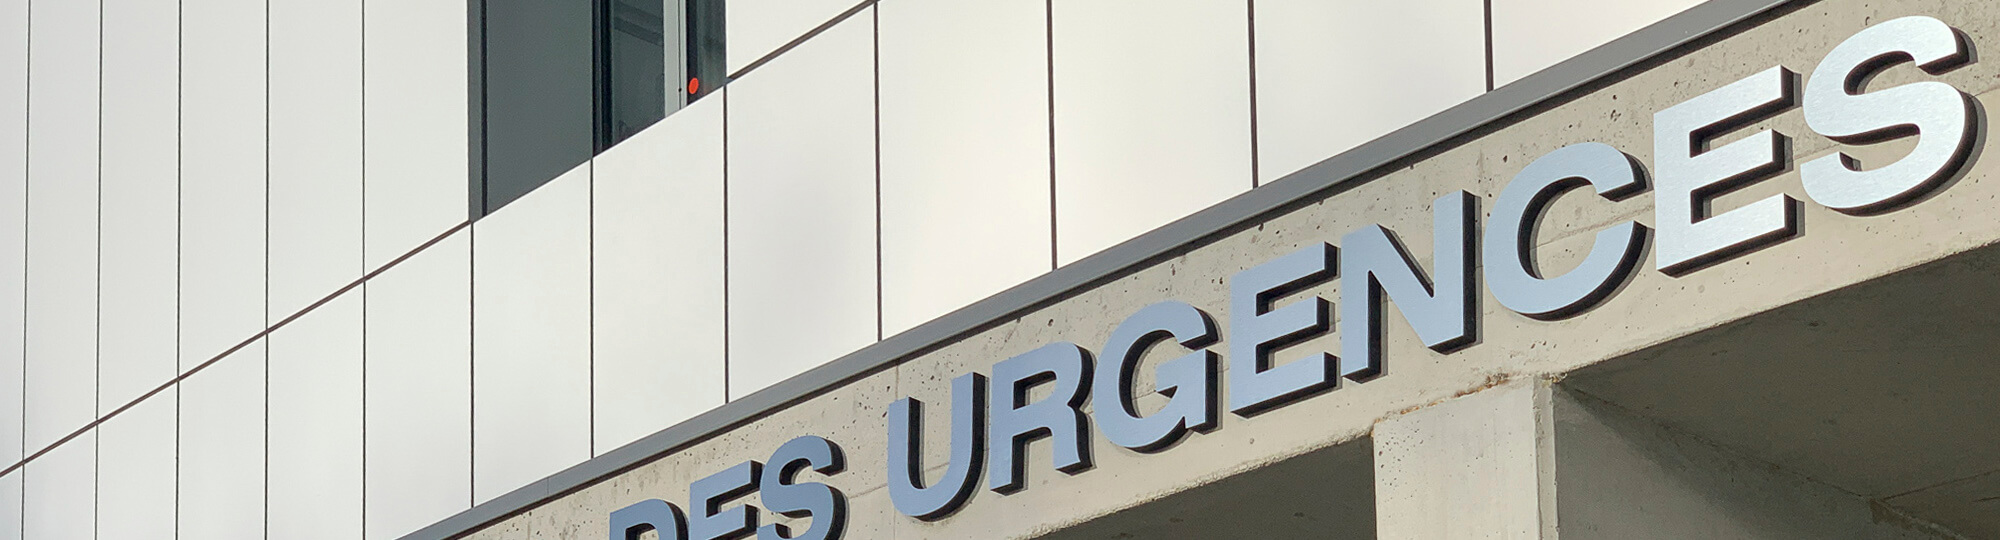 Centre Hospitalier Grenoble Alpes | Signalyon